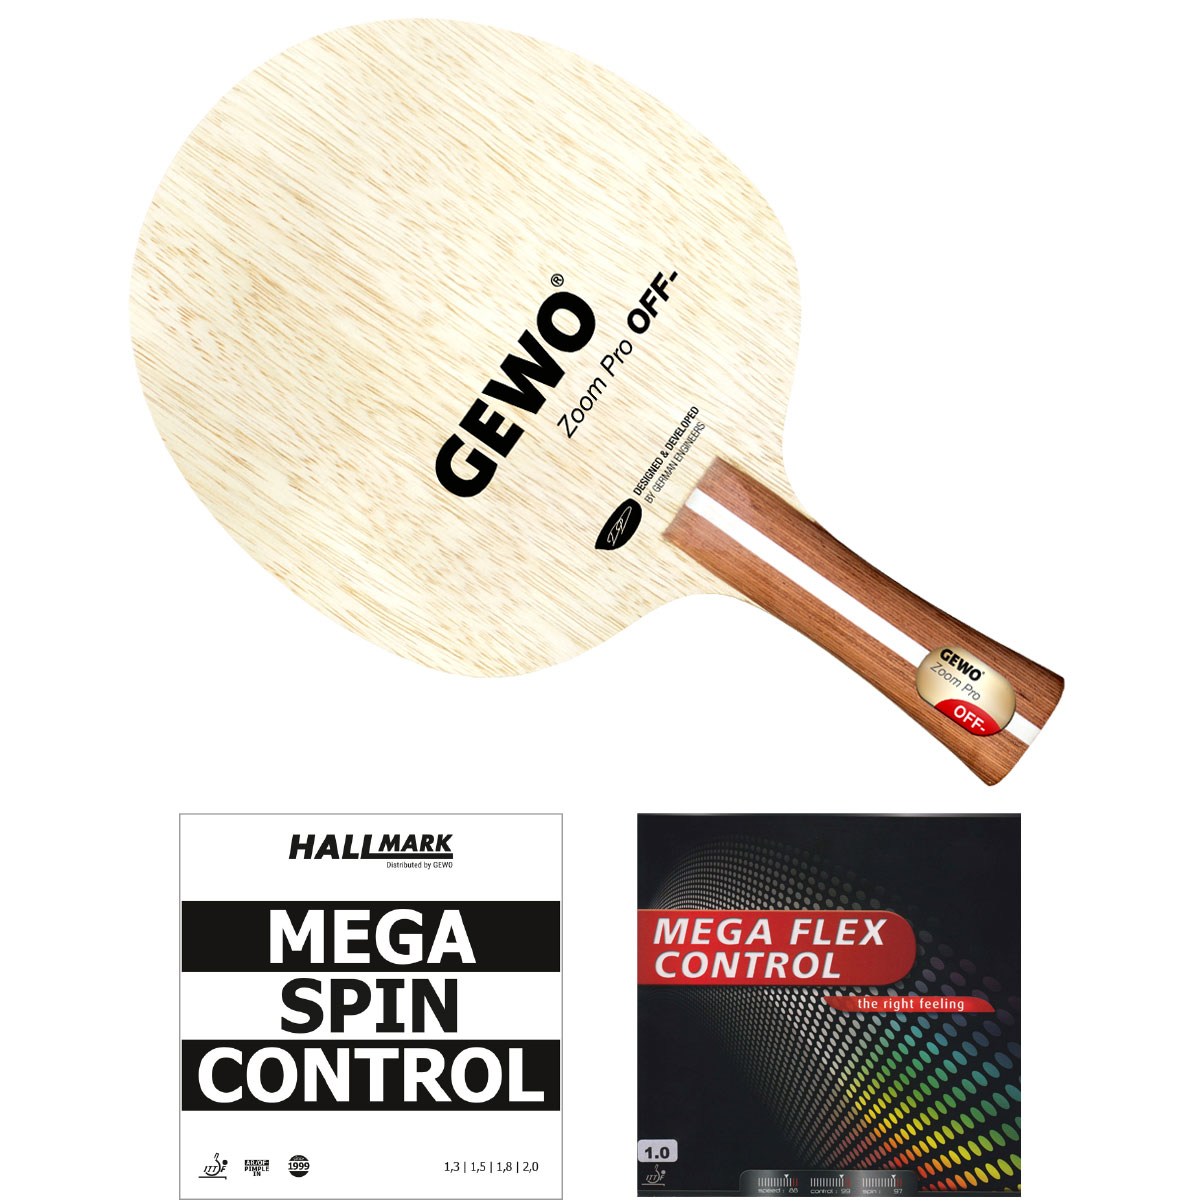 GEWO Bat: Blade Zoom Pro with HALLMARK Mega Spin Control + Mega Flex Control